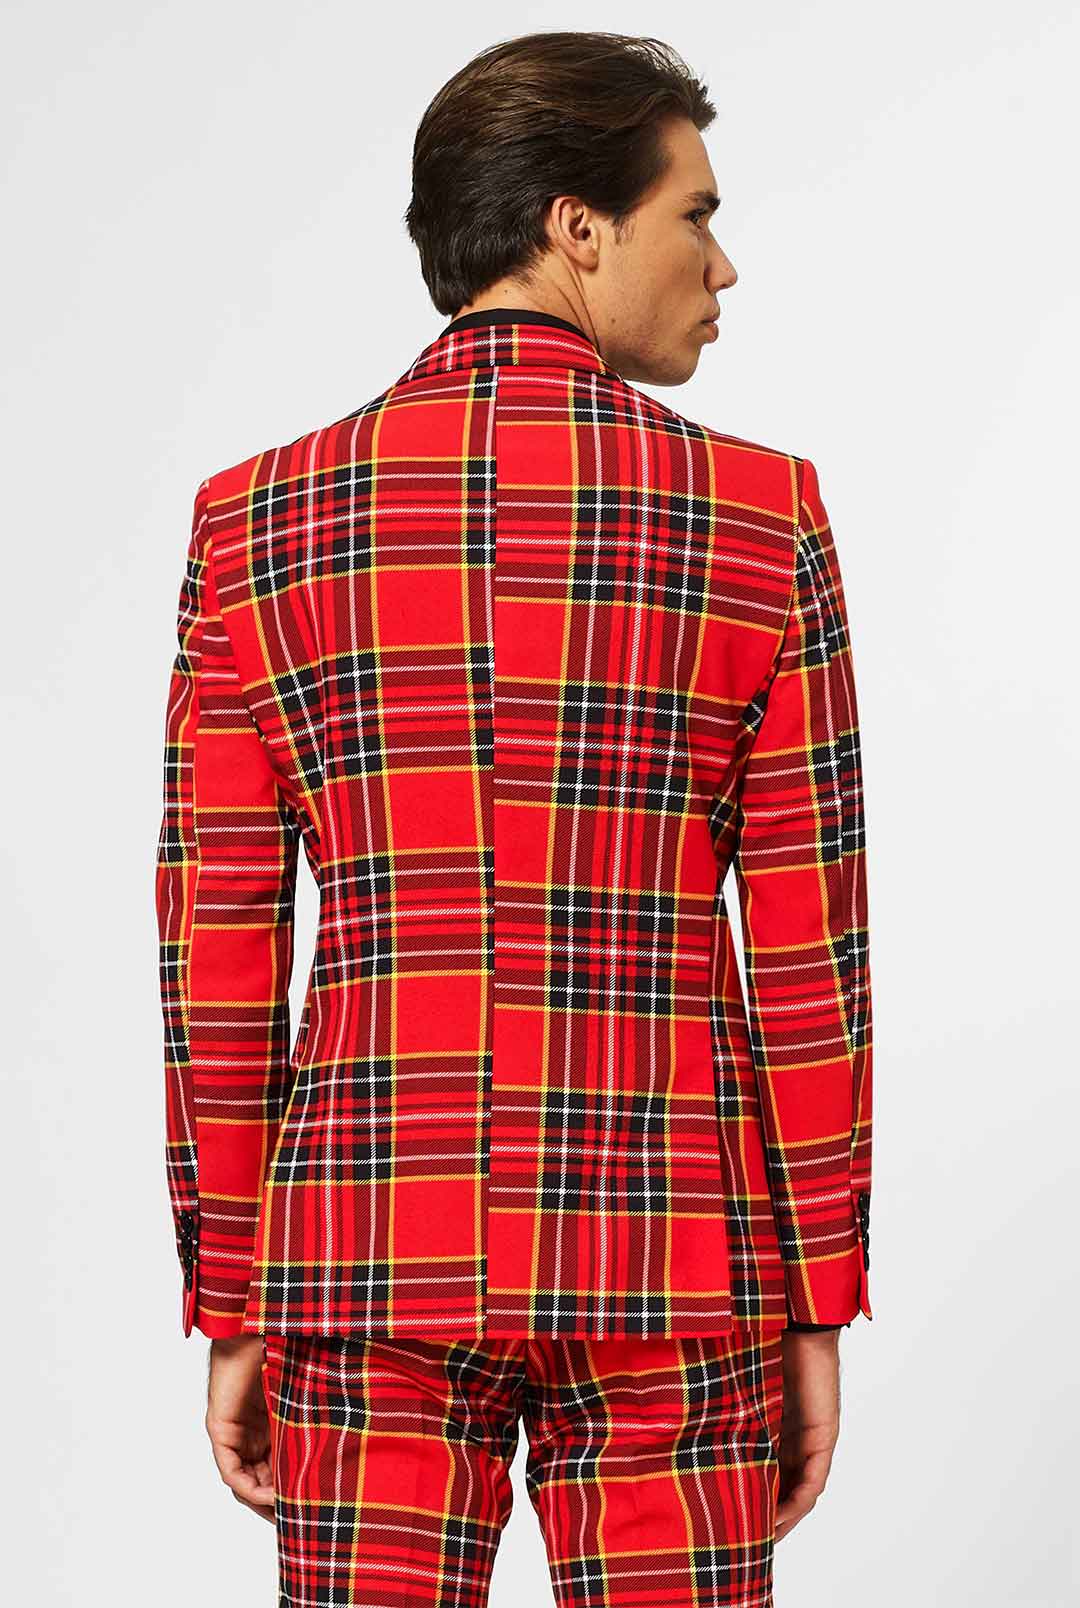 Red tartan suit jacket